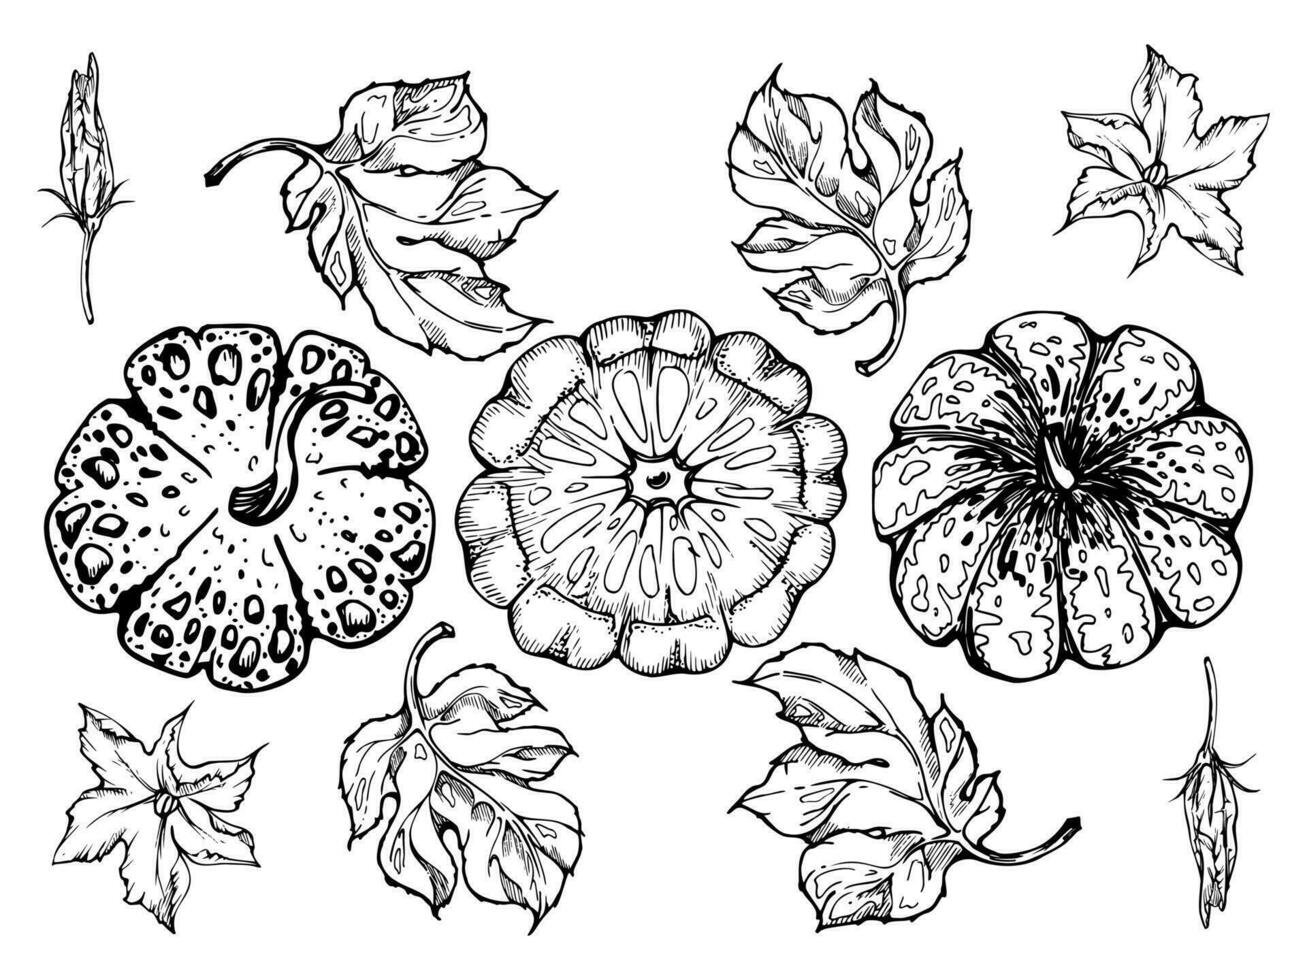 Hand drawn ink vector pumpkin gourd squash. Sketch illustration art for Thanksgiving, Halloween, harvest, farming. Isolated object, outline. Design for restaurant menu print, cafe, website, invitation